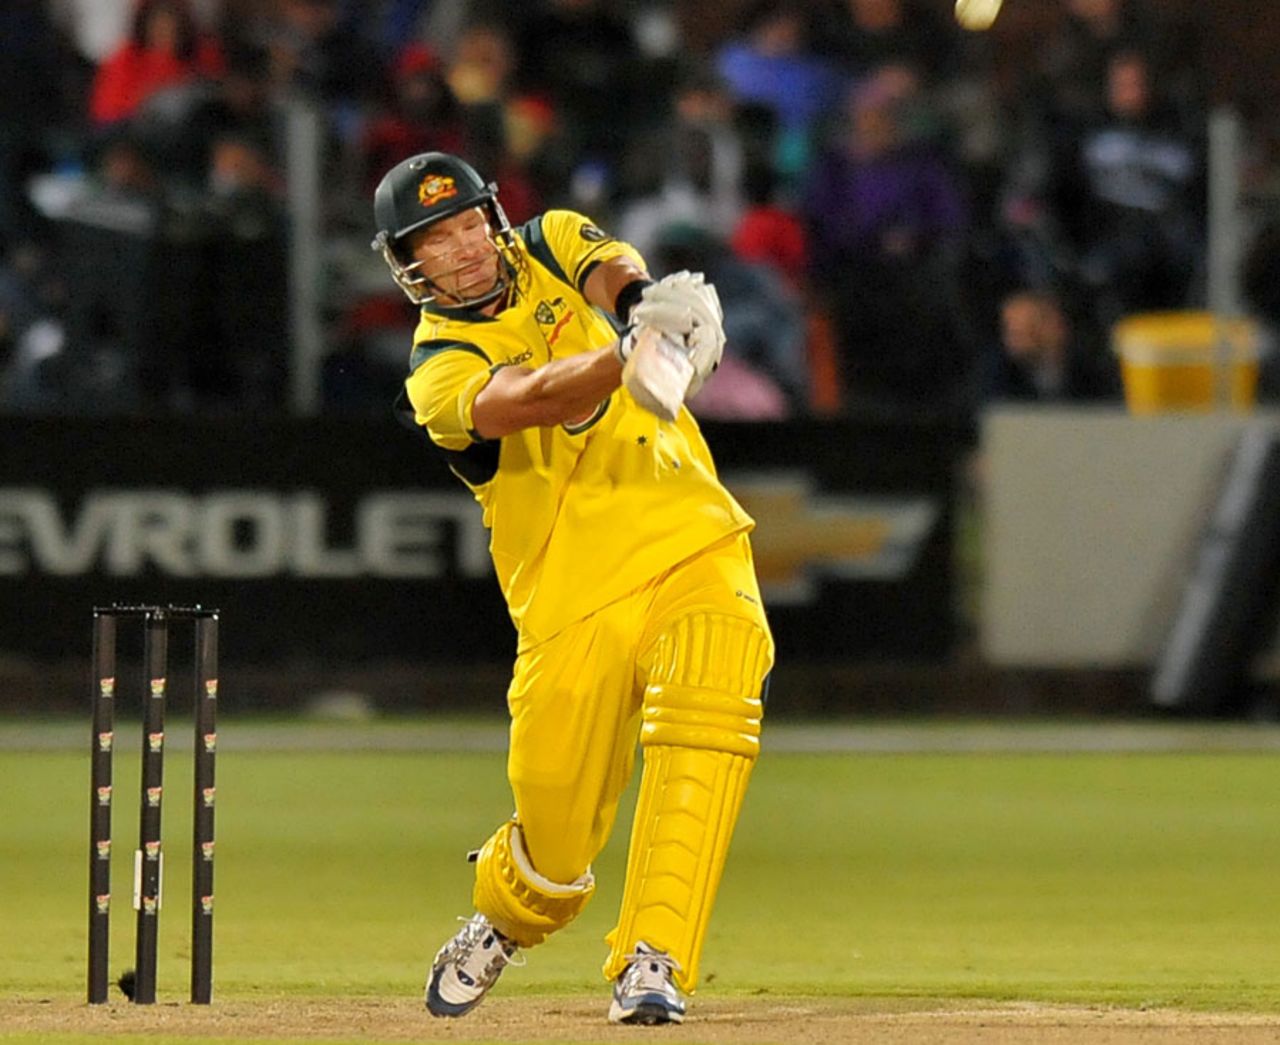 Shane Watson came out to bat after his back spasm but was caught for 15, South Africa v Australia, 2nd ODI, Port Elizabeth, October 23, 2011